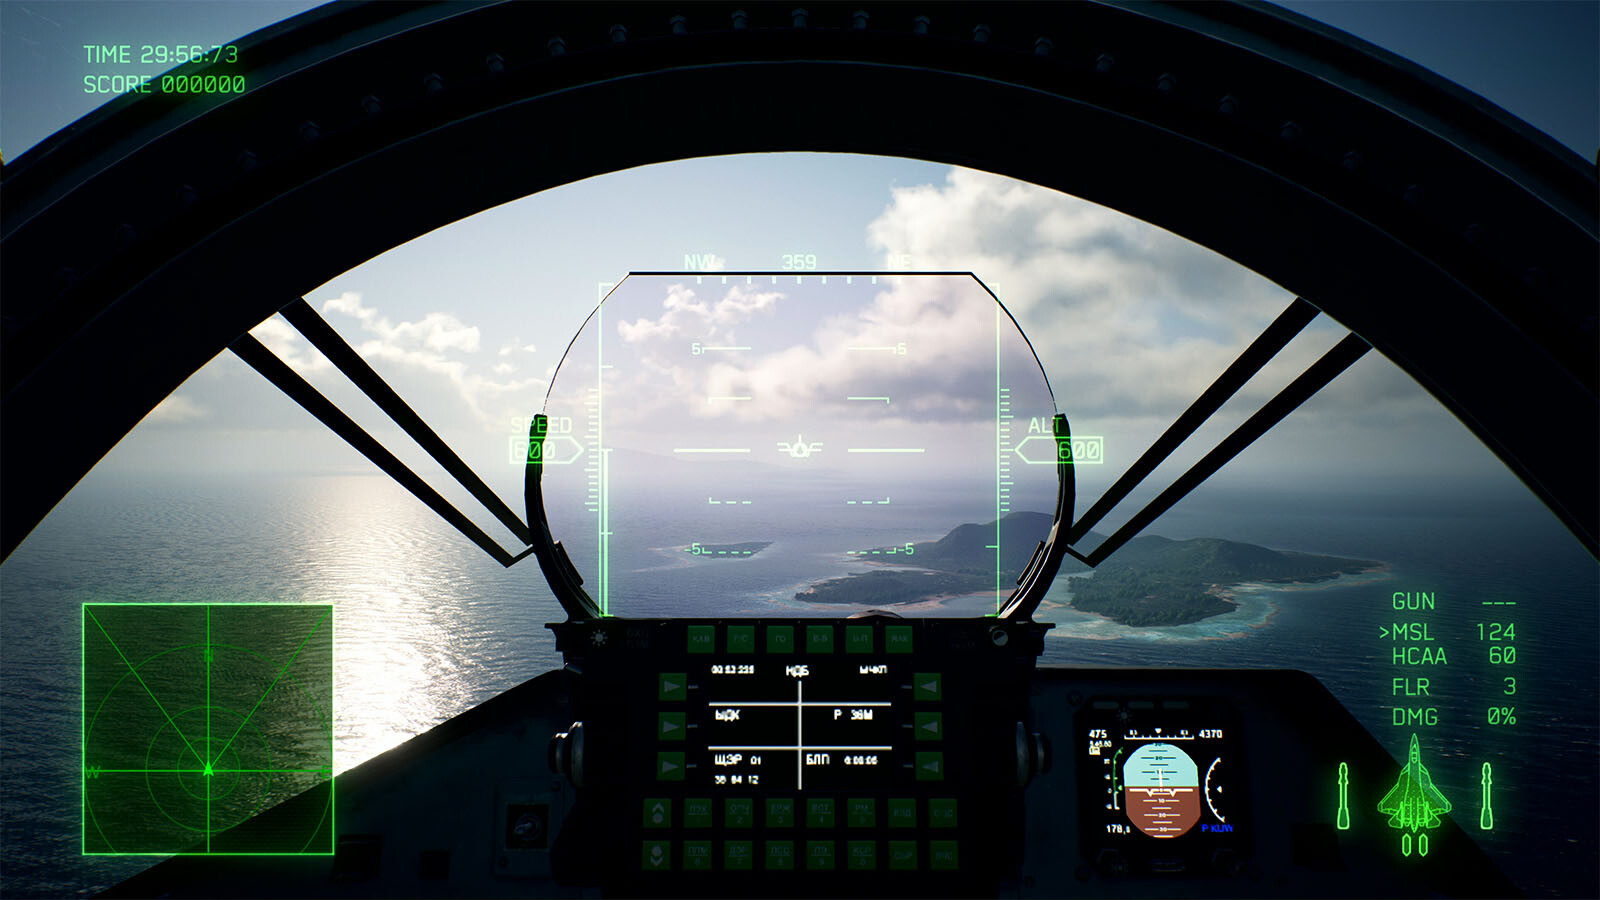 Top Gun: Maverick DLC for Ace Combat 7: Skies Unknown Launches Next Week